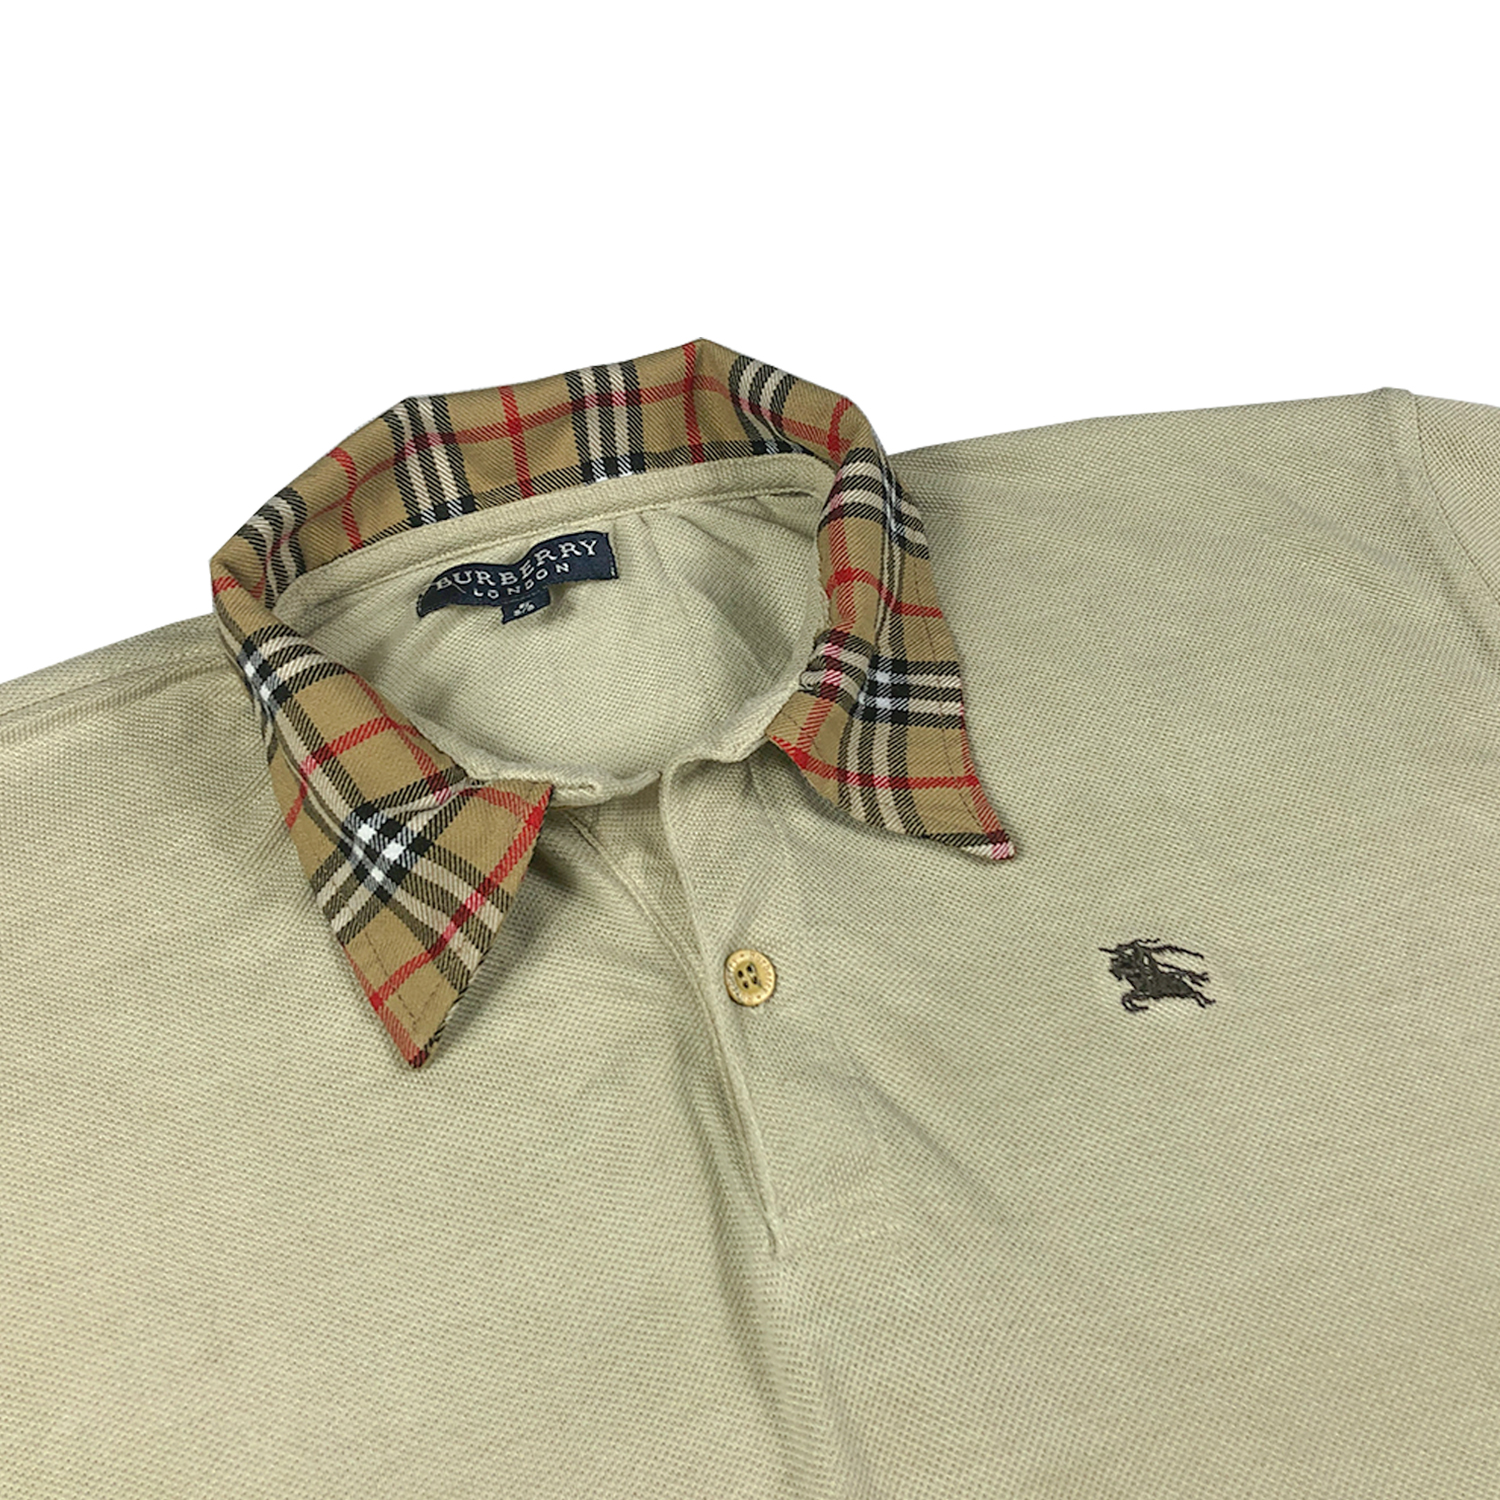 Burberry Nova Check Collar Polo Shirt Ivory | Medium | 90sVillage